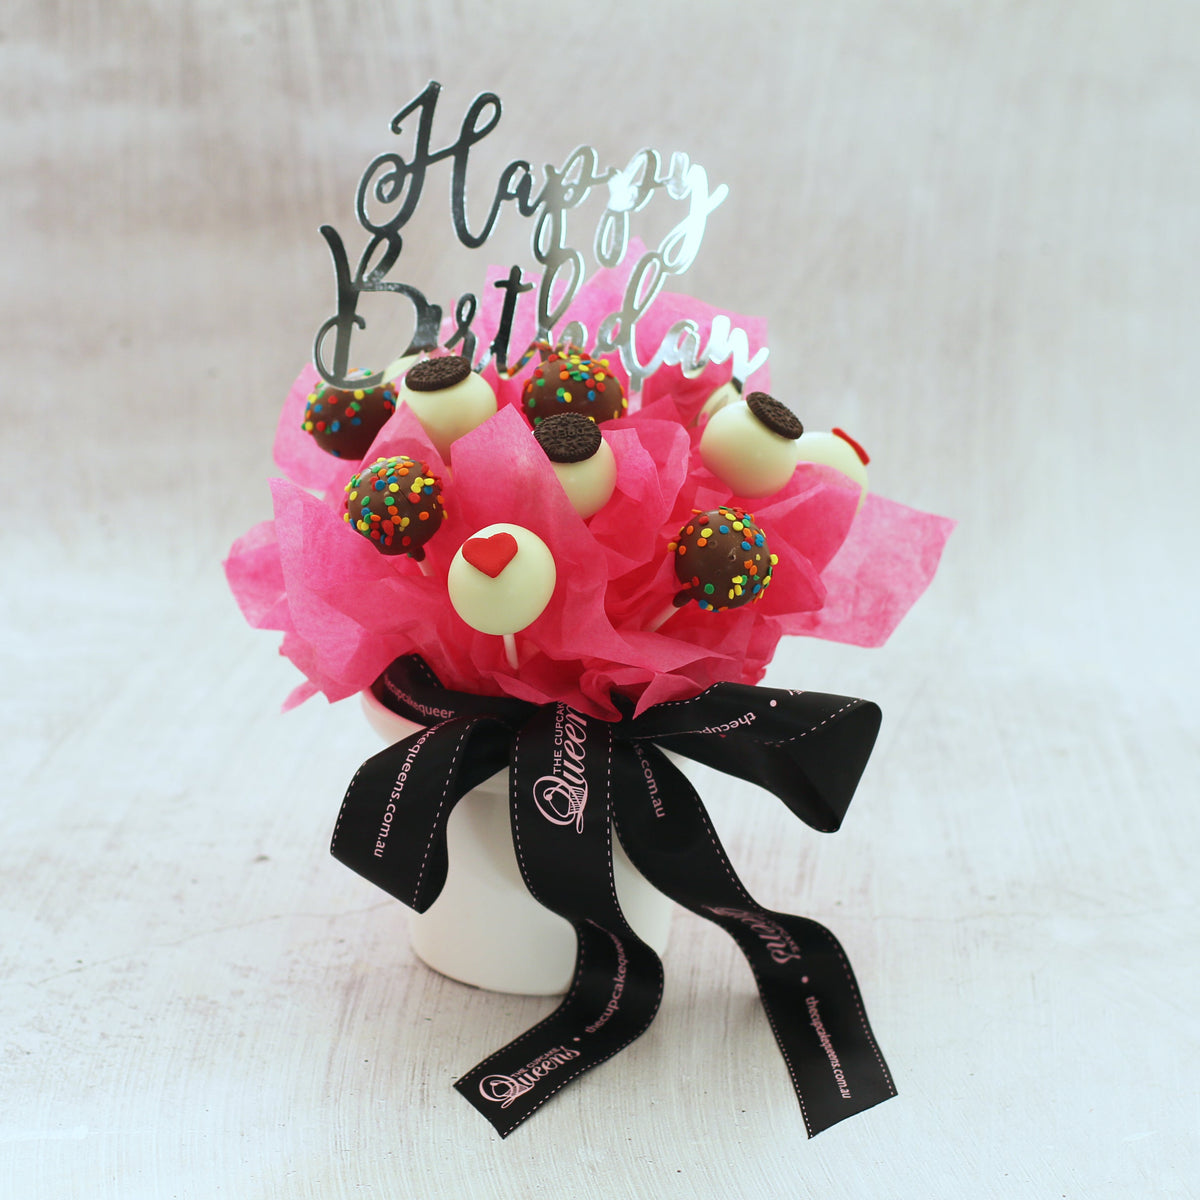 Happy Birthday Cake Pop Bouquet The Cupcake Queens 